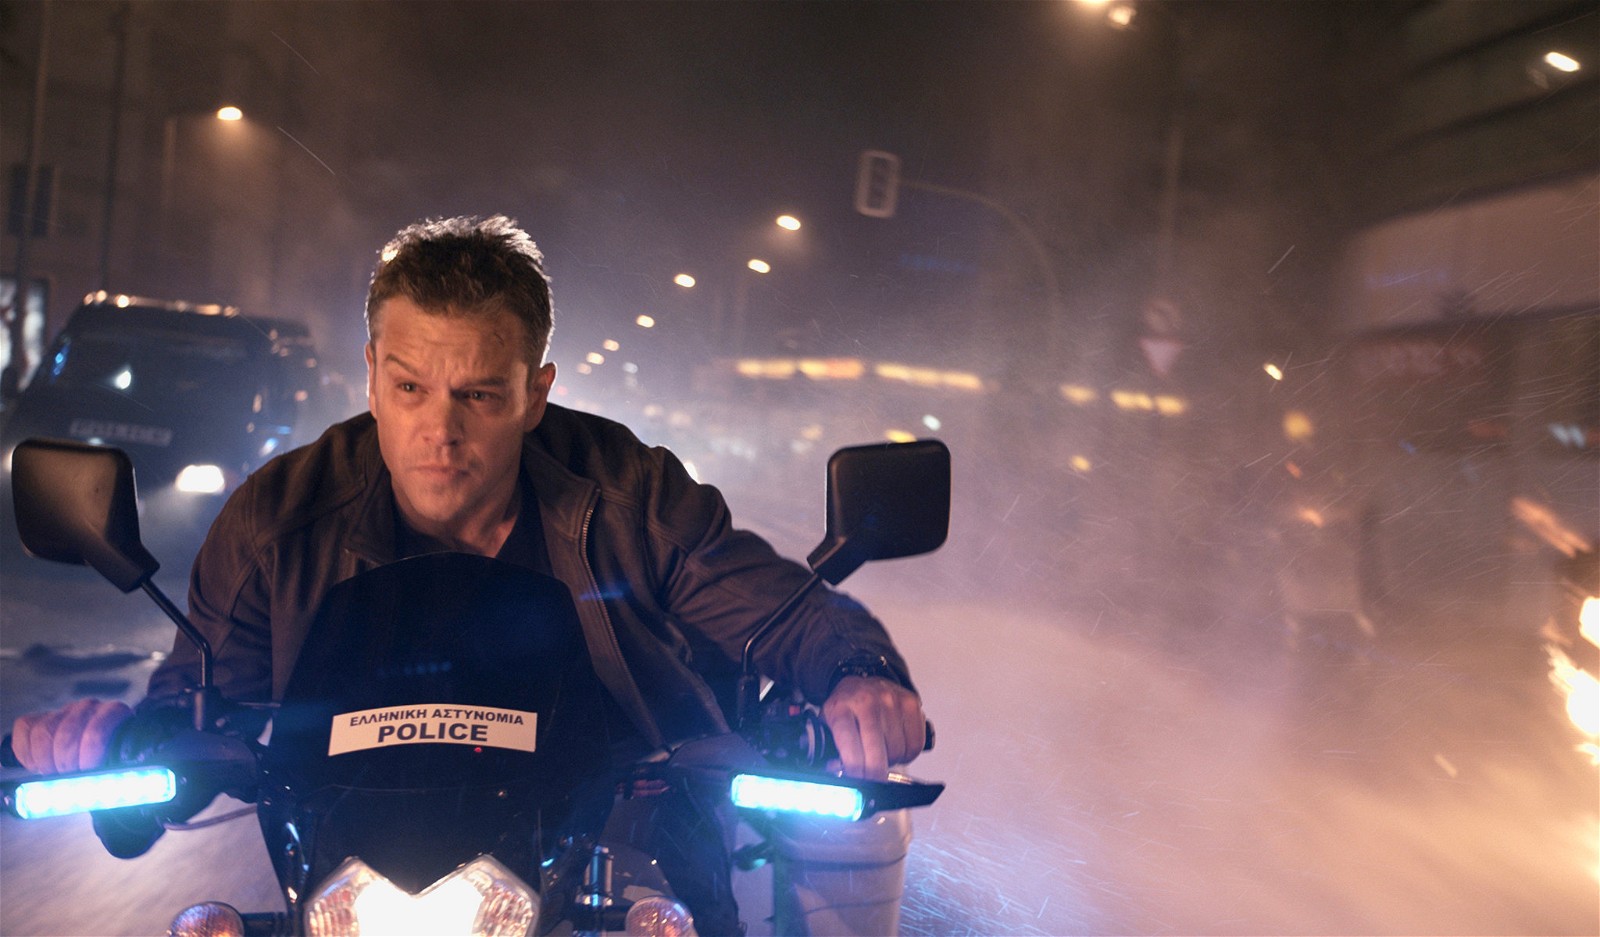 Matt Damon last played the character in 2016's Jason Bourne